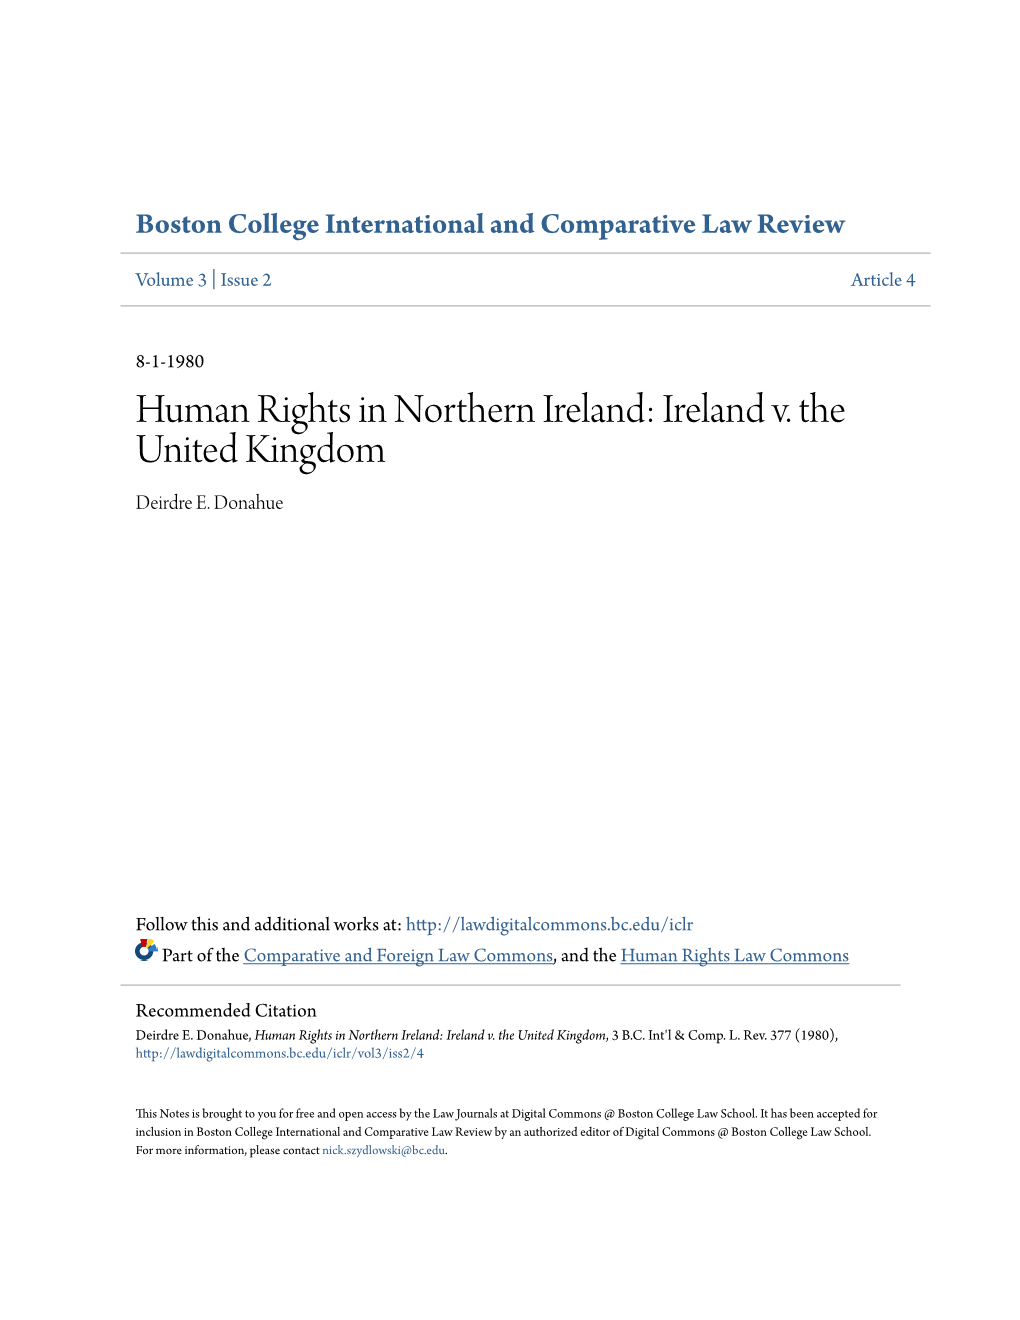 Human Rights in Northern Ireland: Ireland V. the United Kingdom Deirdre E